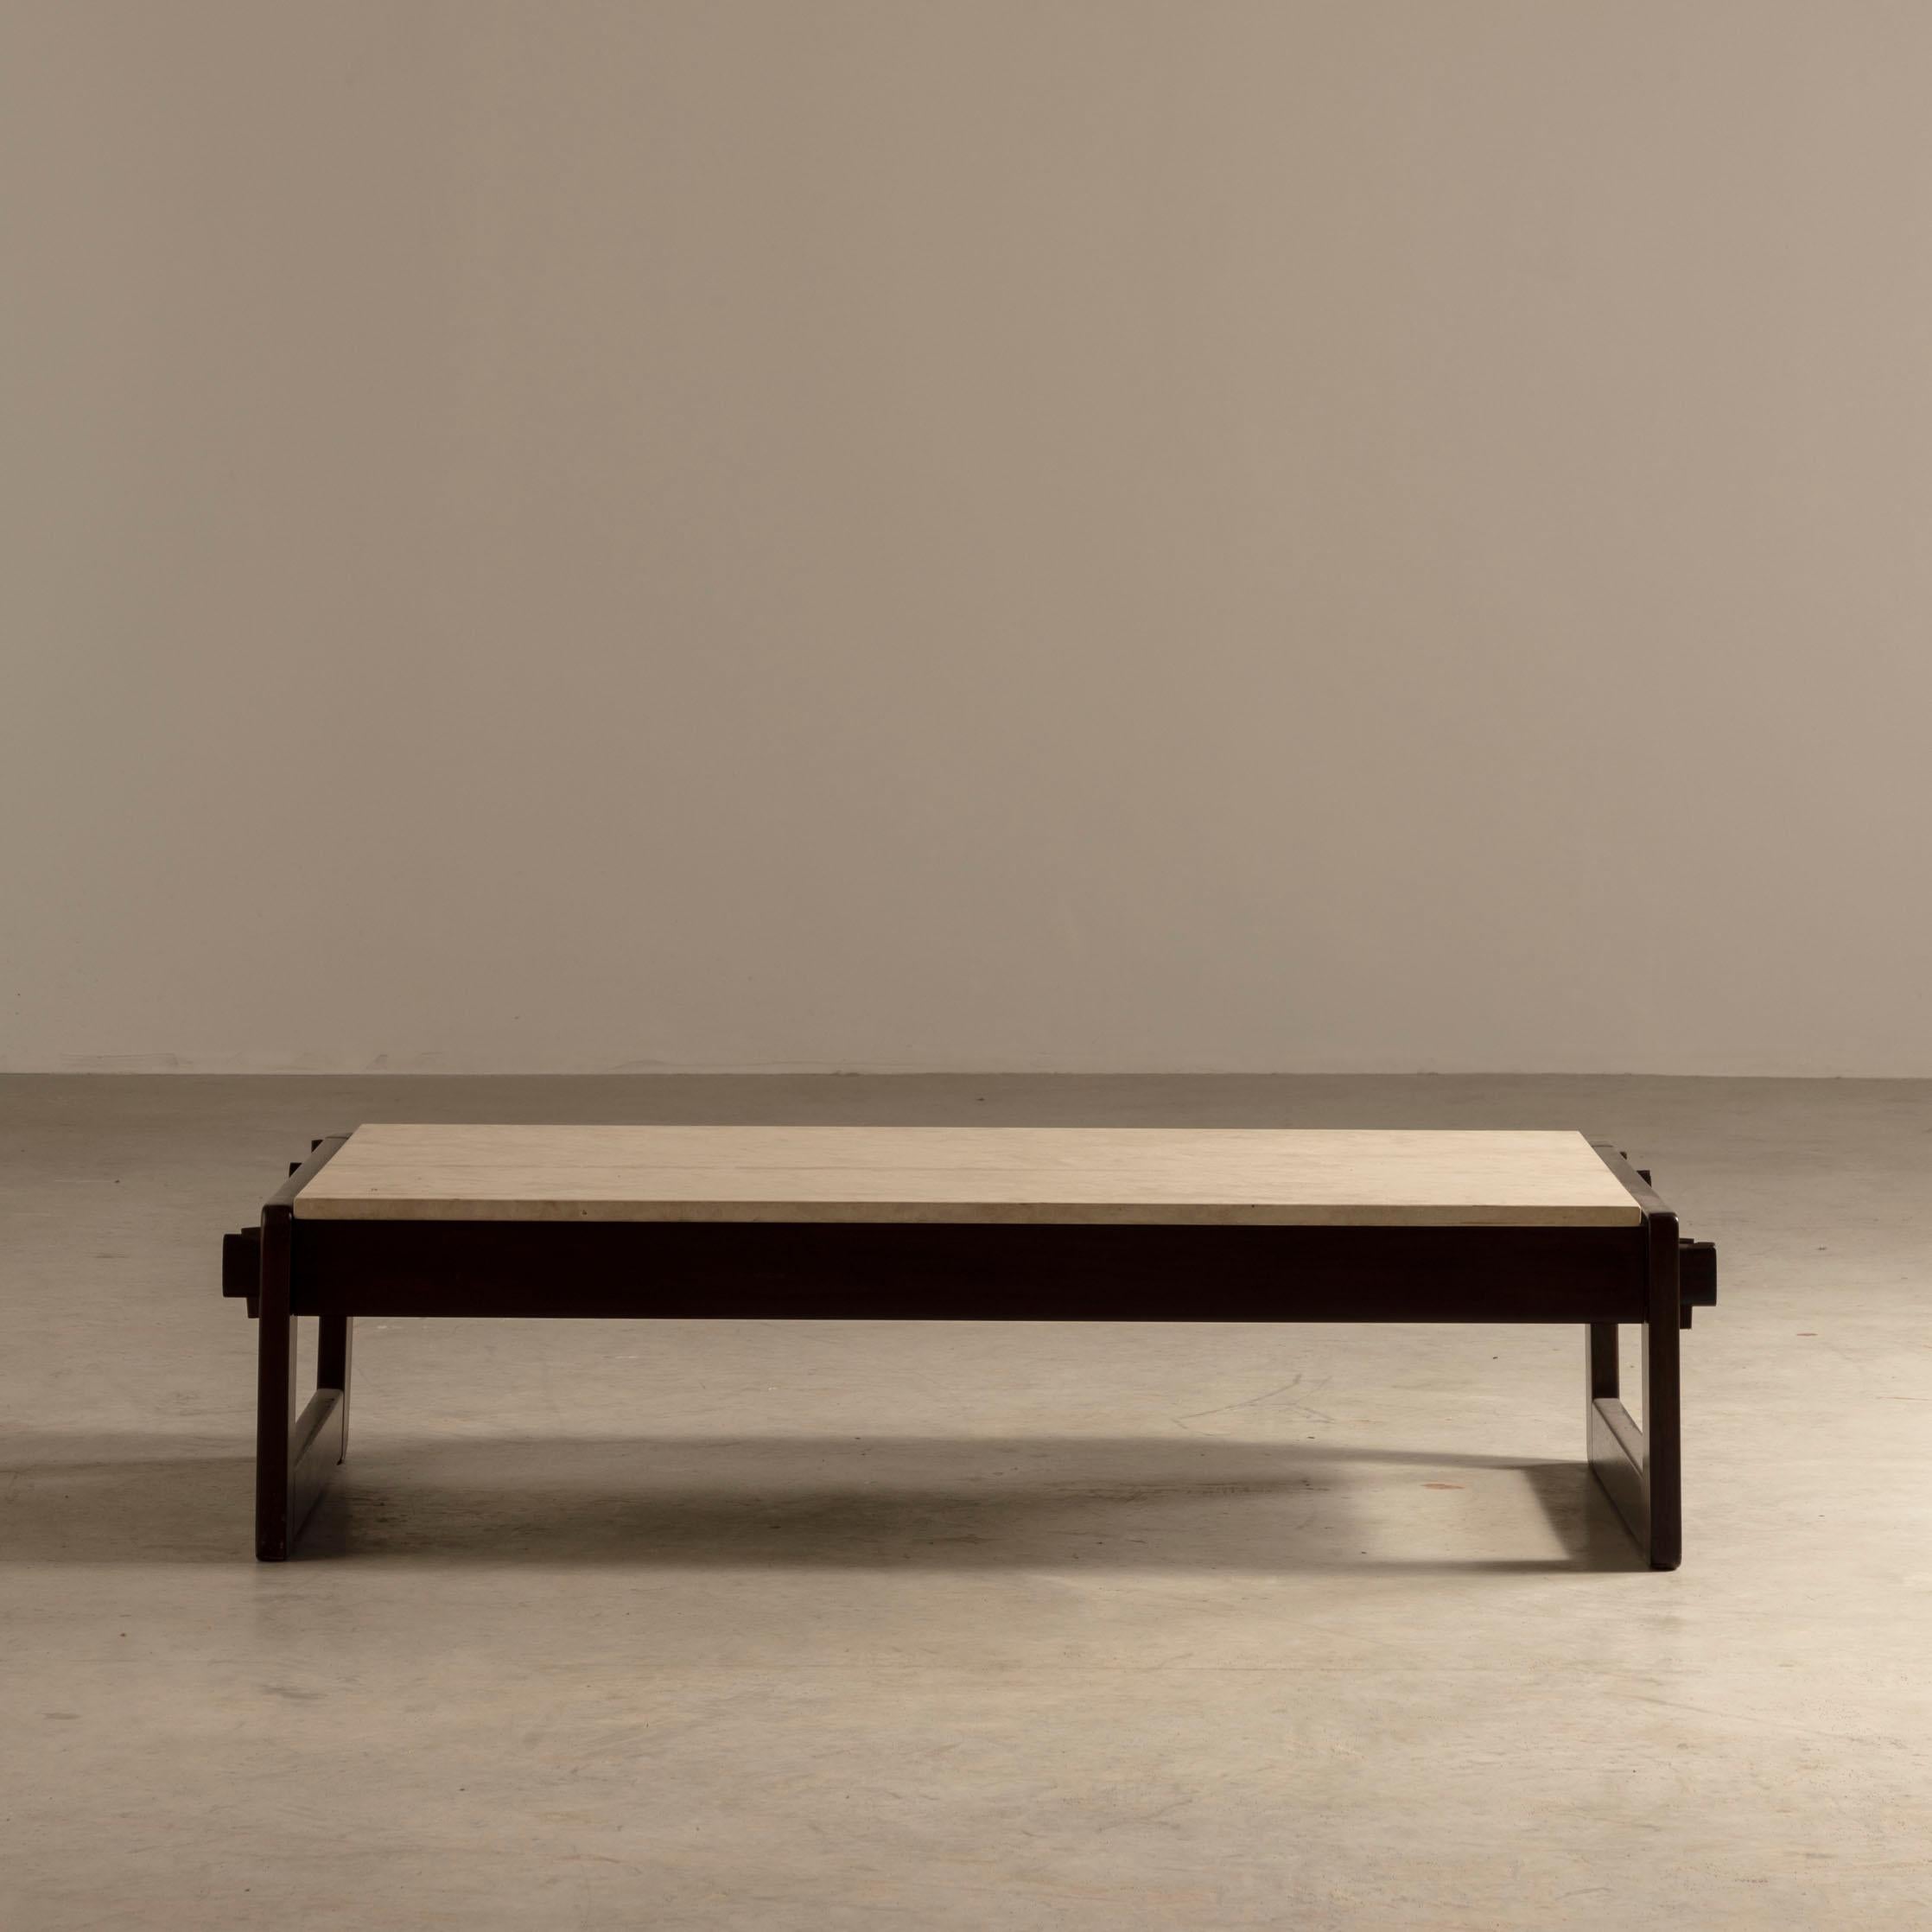 20th Century 'MP-79' Center Table, by Percival Lafer, Brazilian Mid-Century Modern Design For Sale